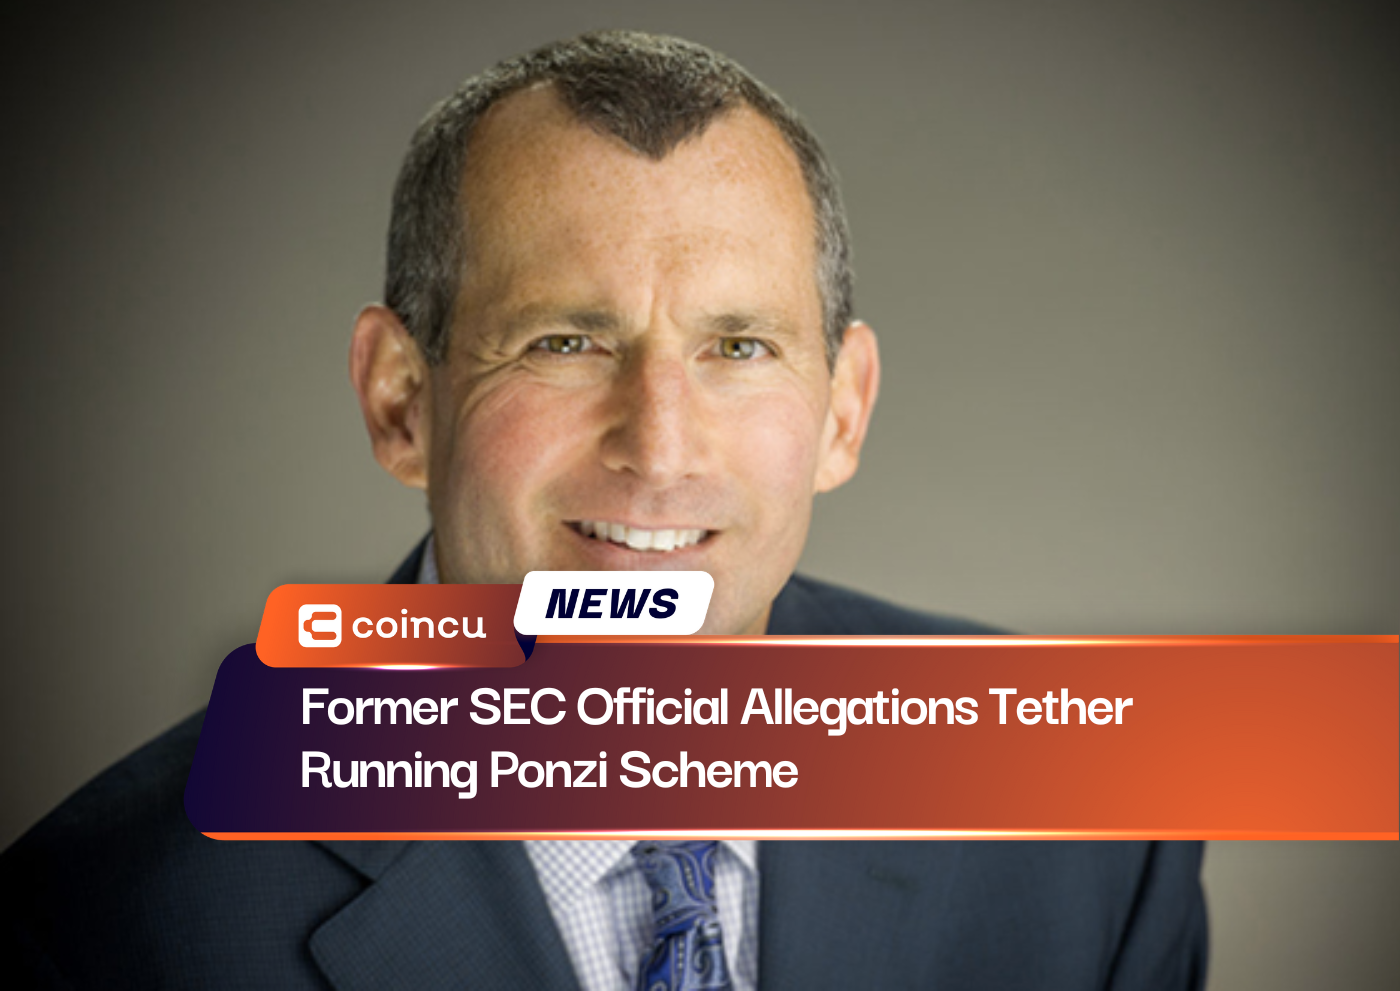 Former SEC Official Allegations Tether Running Ponzi Scheme